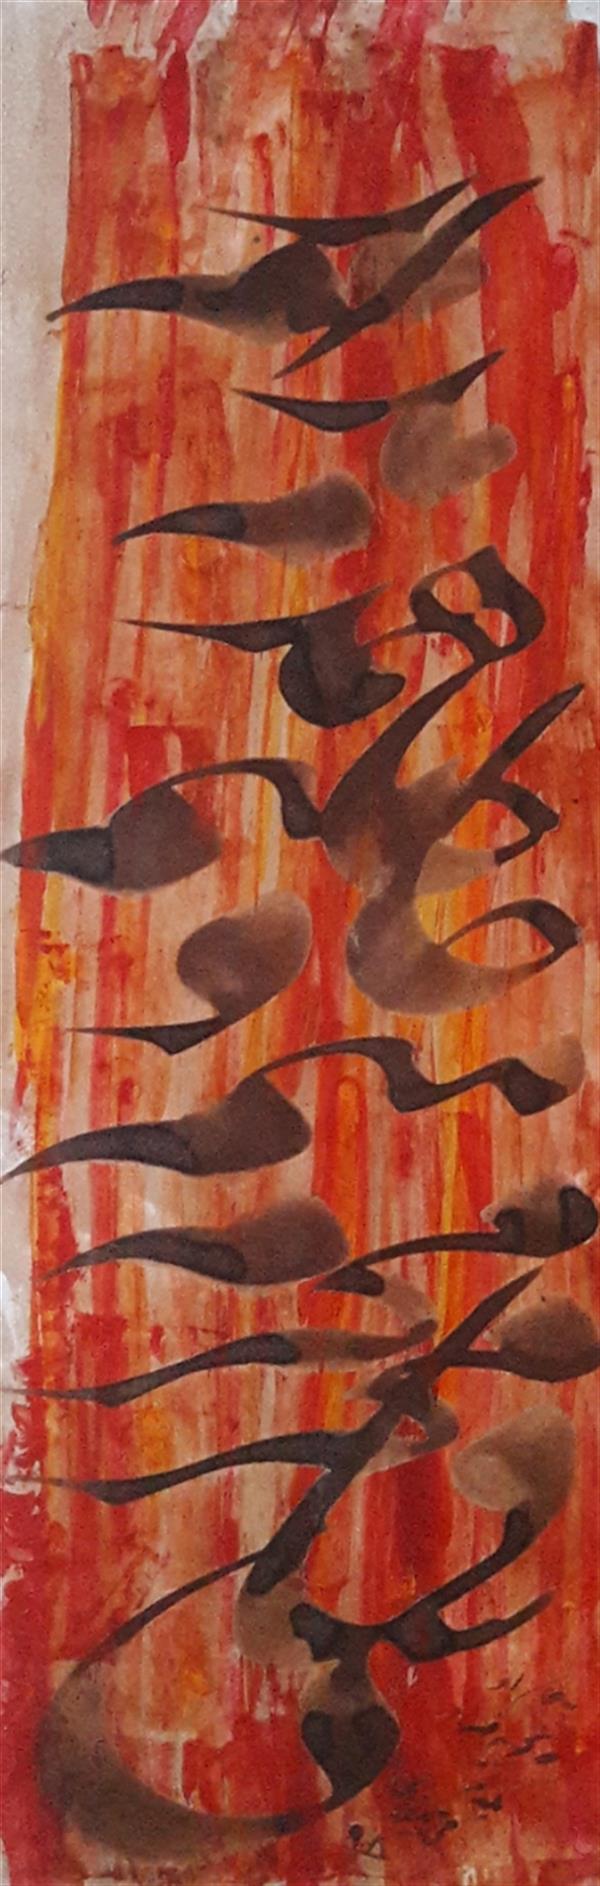 هنر خوشنویسی محفل خوشنویسی محمد مظهری (مدام همدم جامیم و محرم ساقی)
به جان او که نجوییم غیر او یکدم
(بدون قاب)
مرکب و اکریلیک روی مقوا